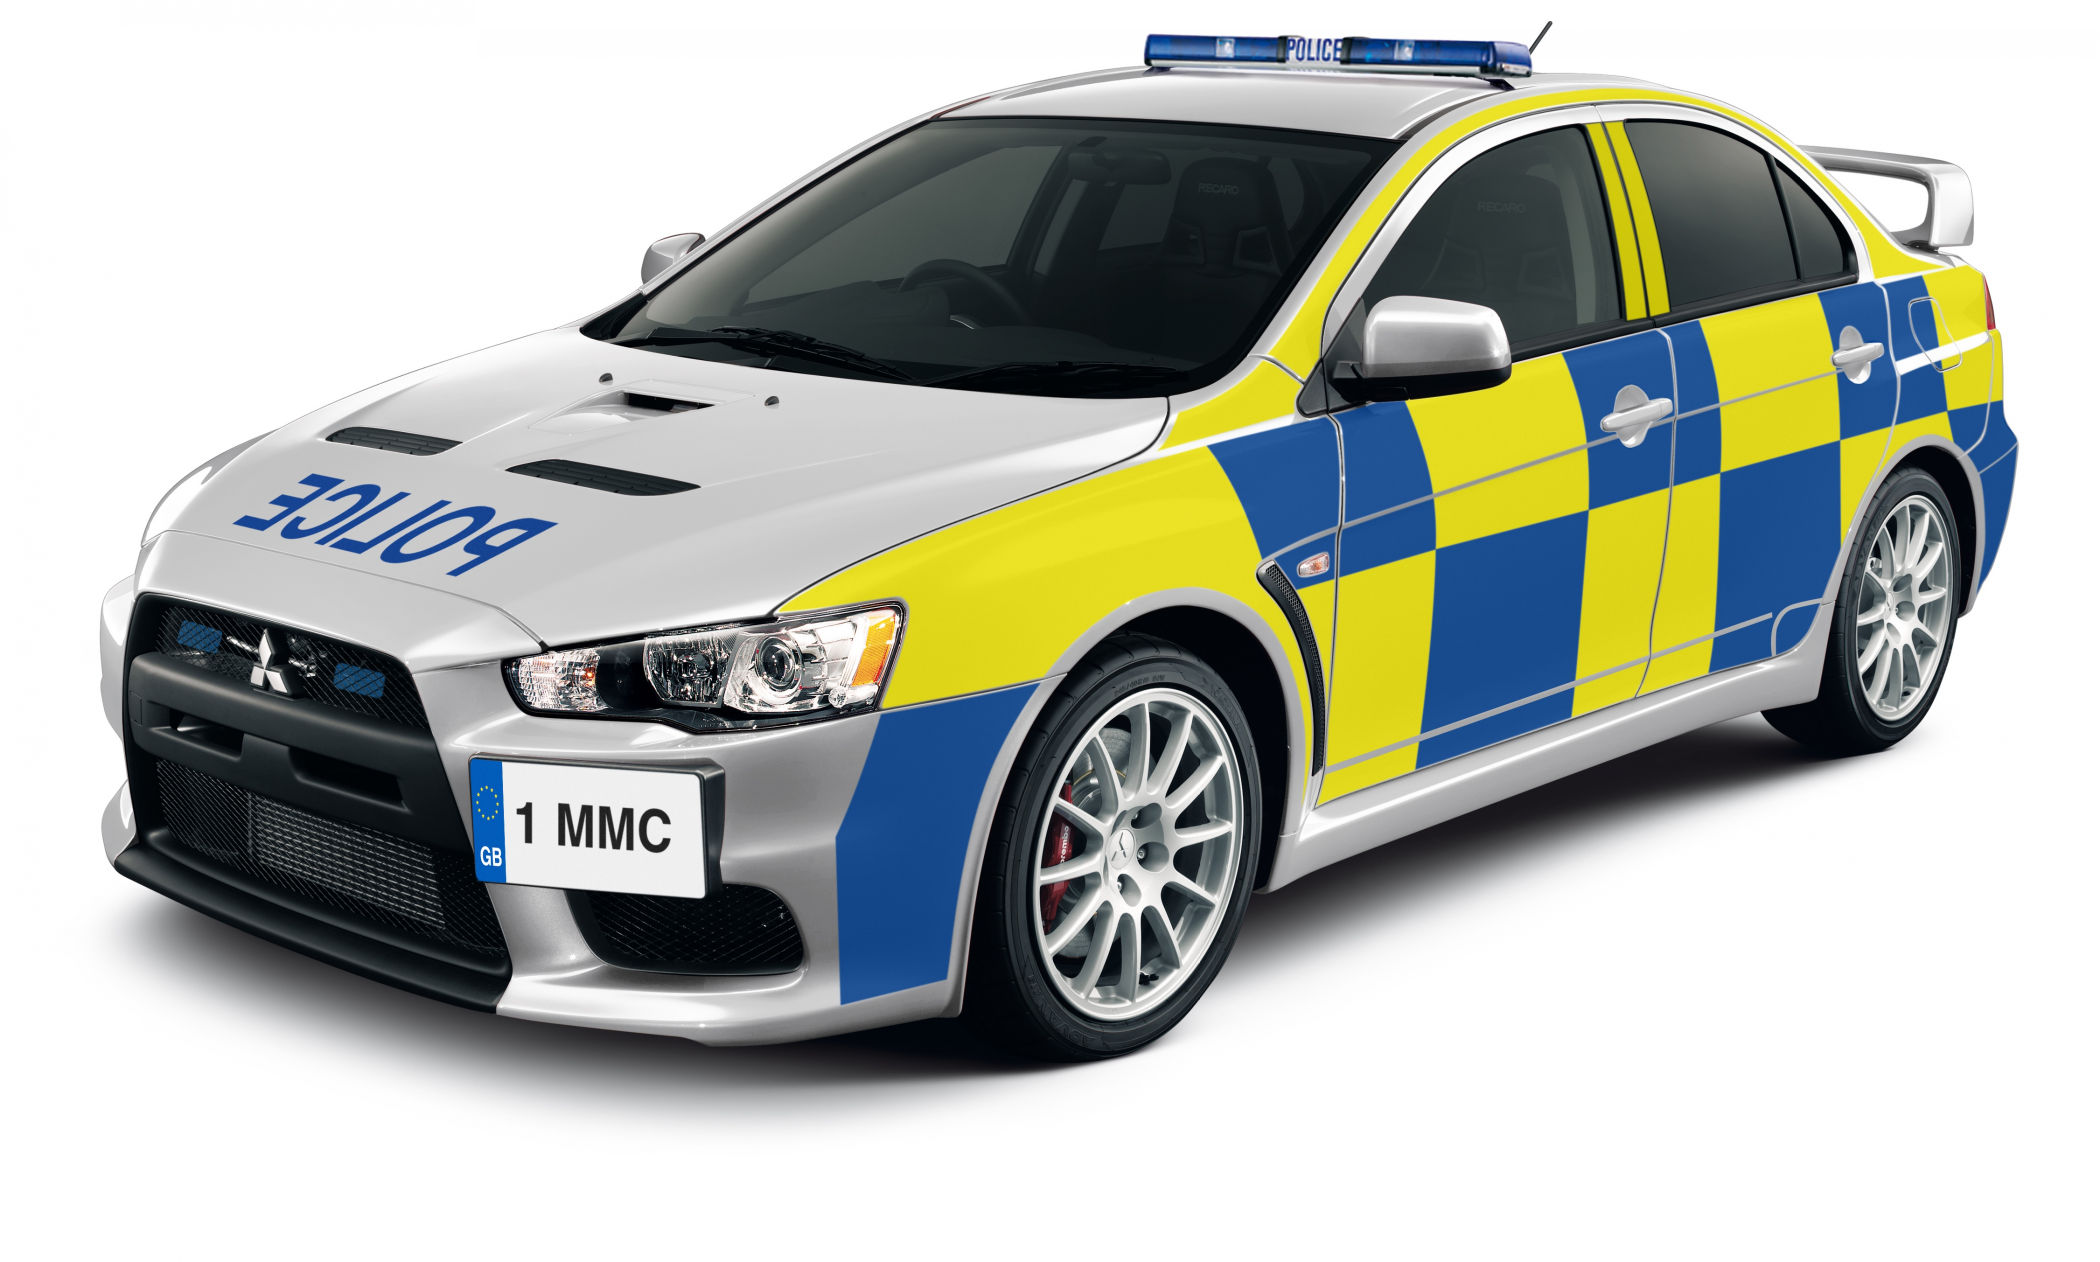 Police Car Hd Lancer Evolution X Uk Pic High Res 281052 - Mitsubishi Lancer Police Car - HD Wallpaper 